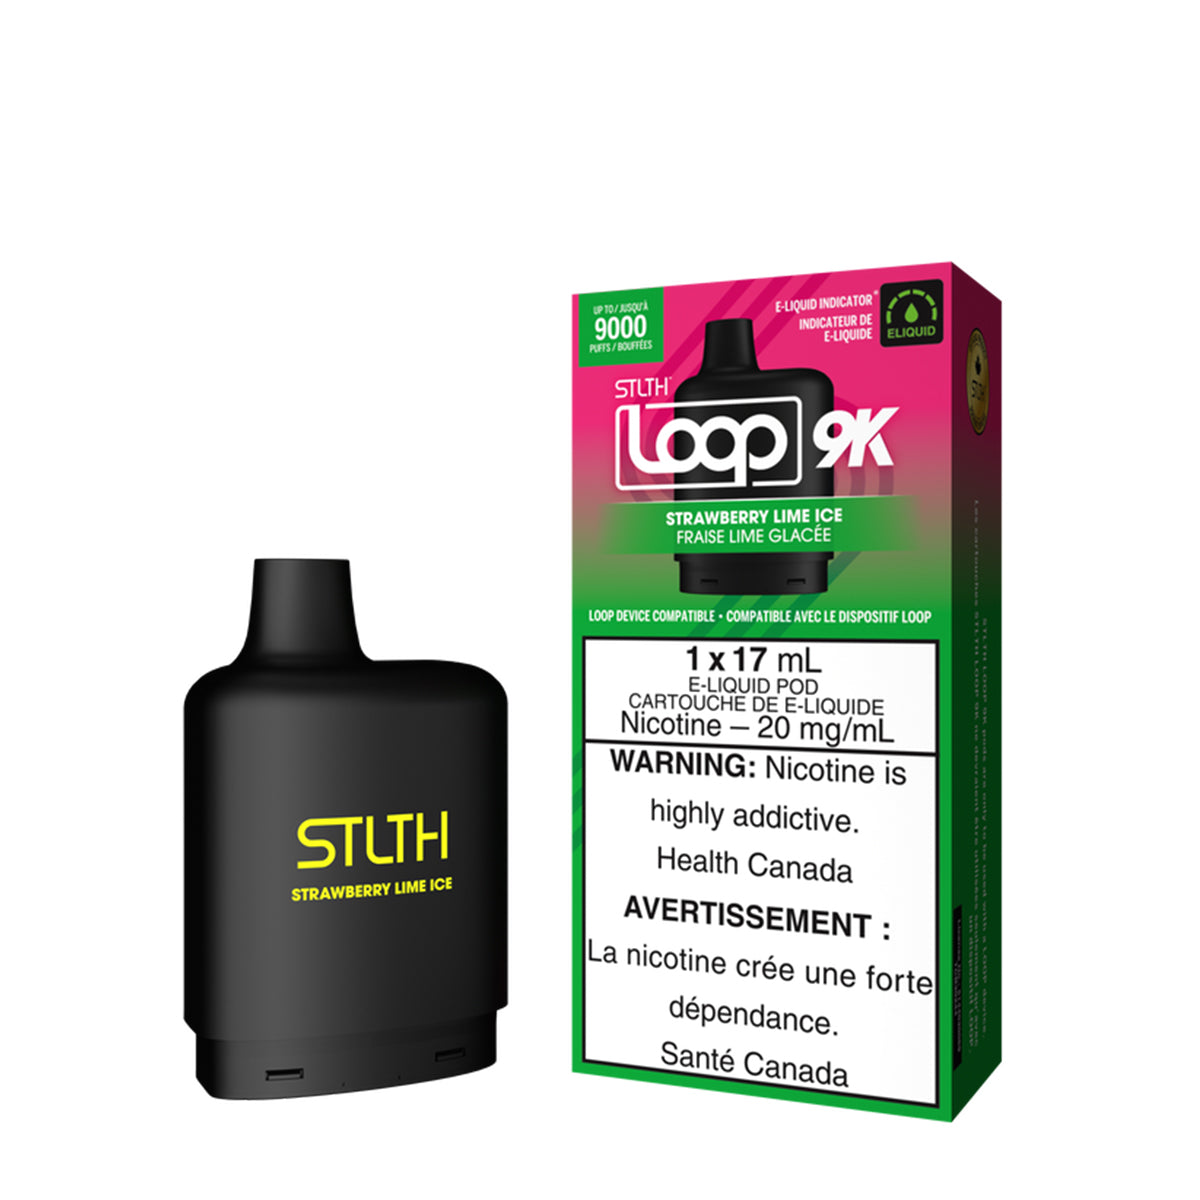 Stlth Loop 9k - Strawberry Lime Ice (1x17mL) (6965306064951)